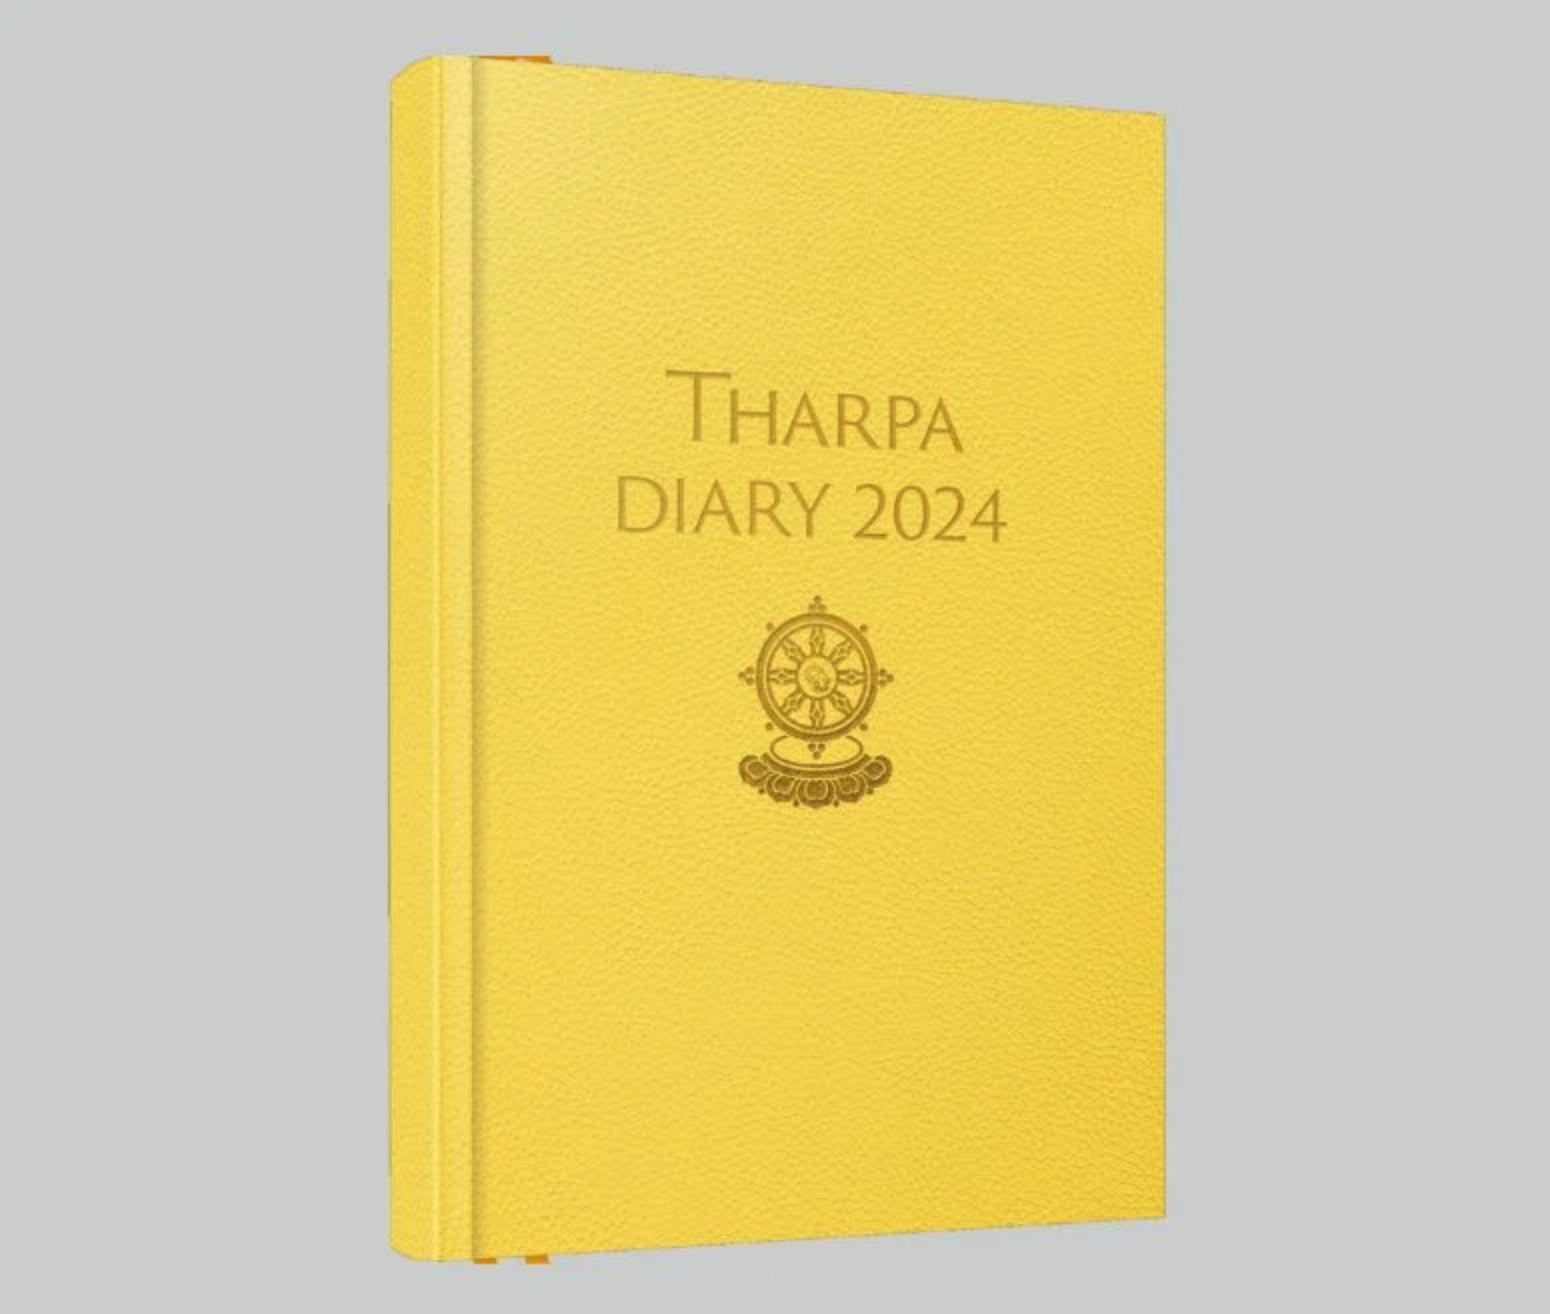 Tharpa234